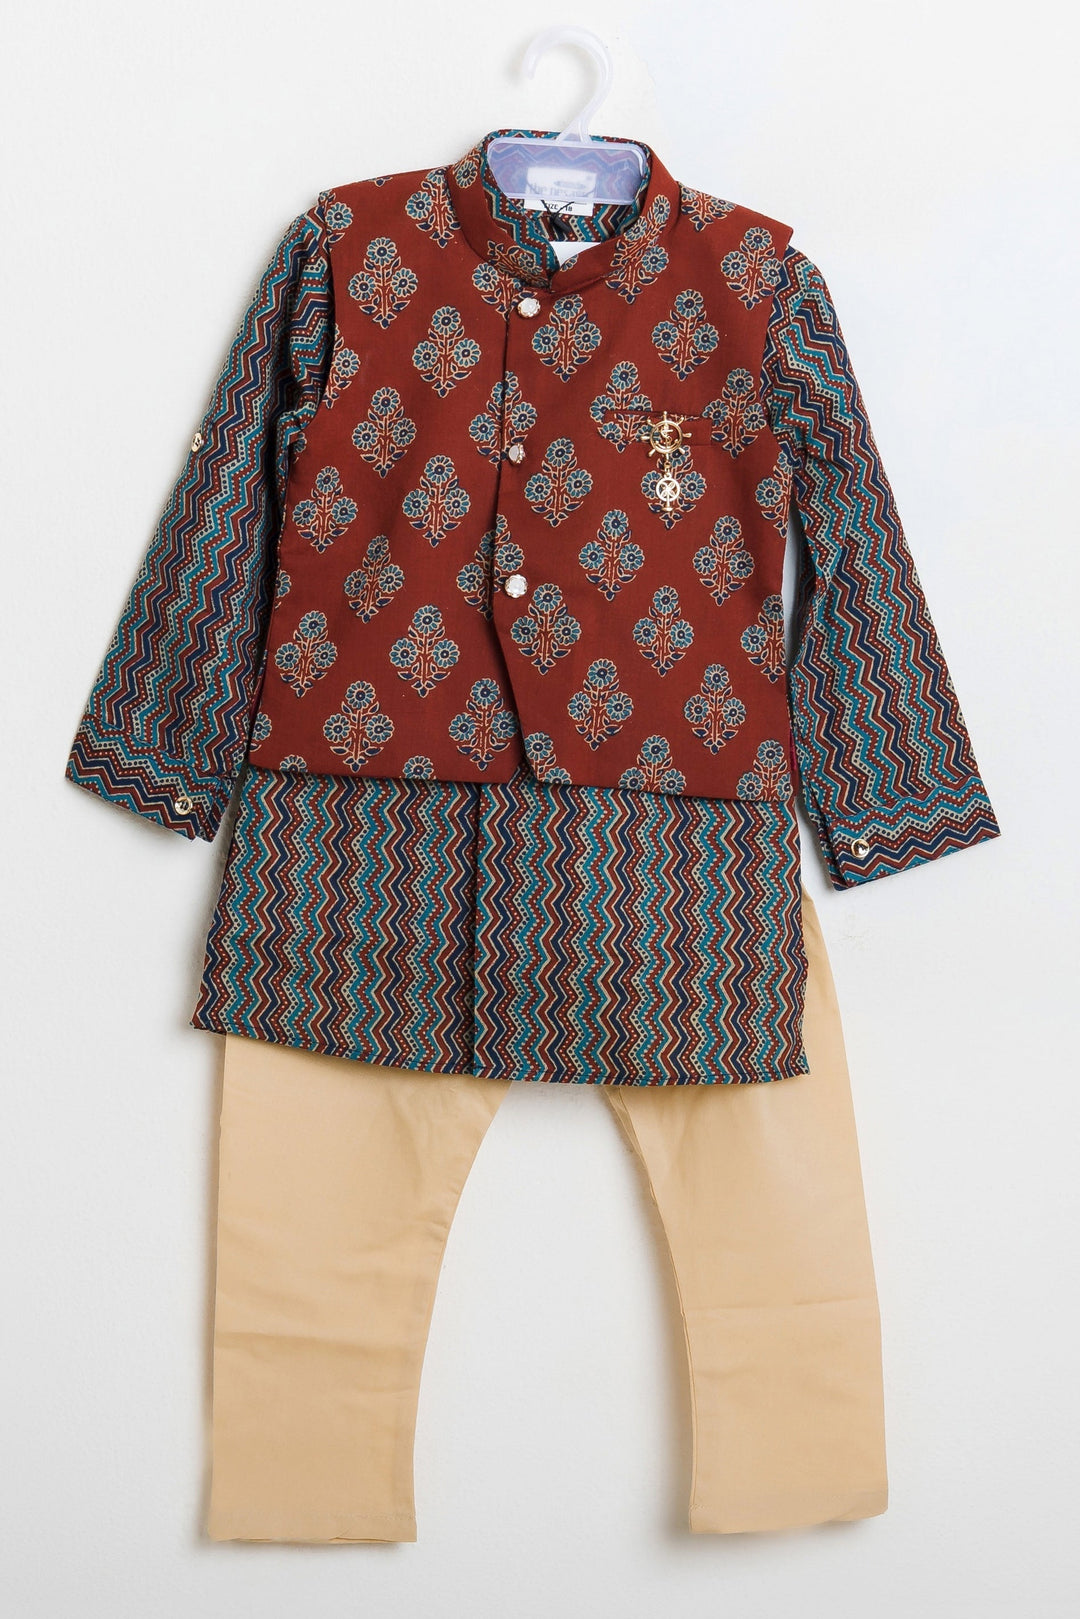 The Nesavu Boys Jacket Sets Multi Colour Cotton Kurta N Mughal Floral Printed Jacket With Sandal Pyjama For Boys Nesavu 12 (3M) / multicolor / Cotton BES194C-12 Latest Three Piece Kurta Set 2023| Fresh Design Kurta| The Nesavu